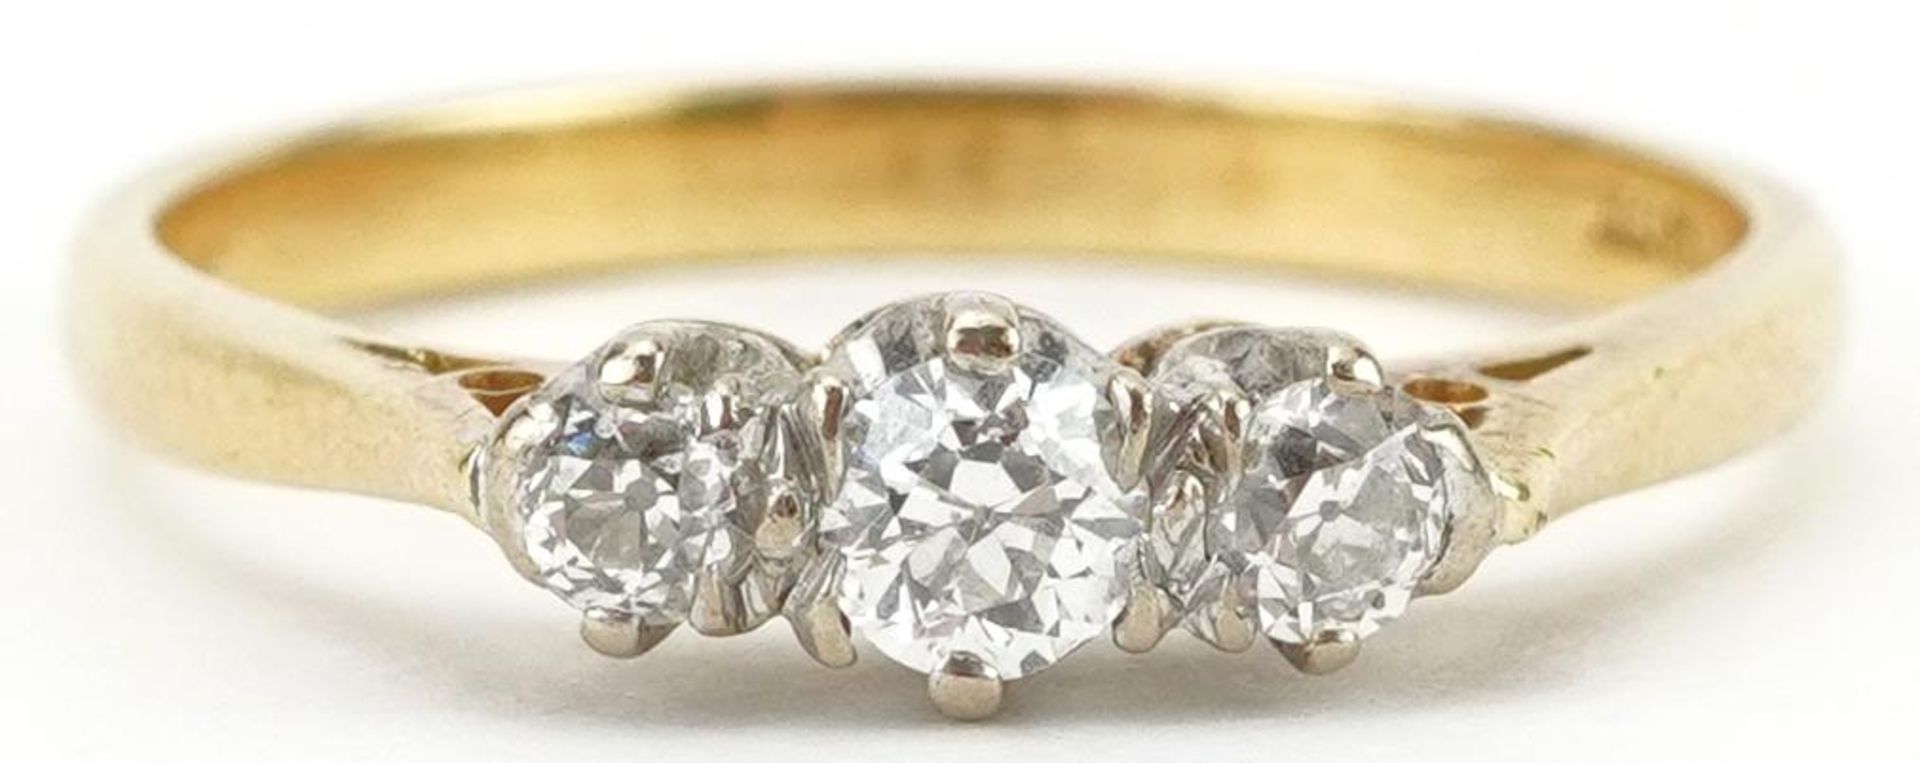 18ct gold diamond three stone ring, total diamond weight 0.20 carat, size P, 3.0g